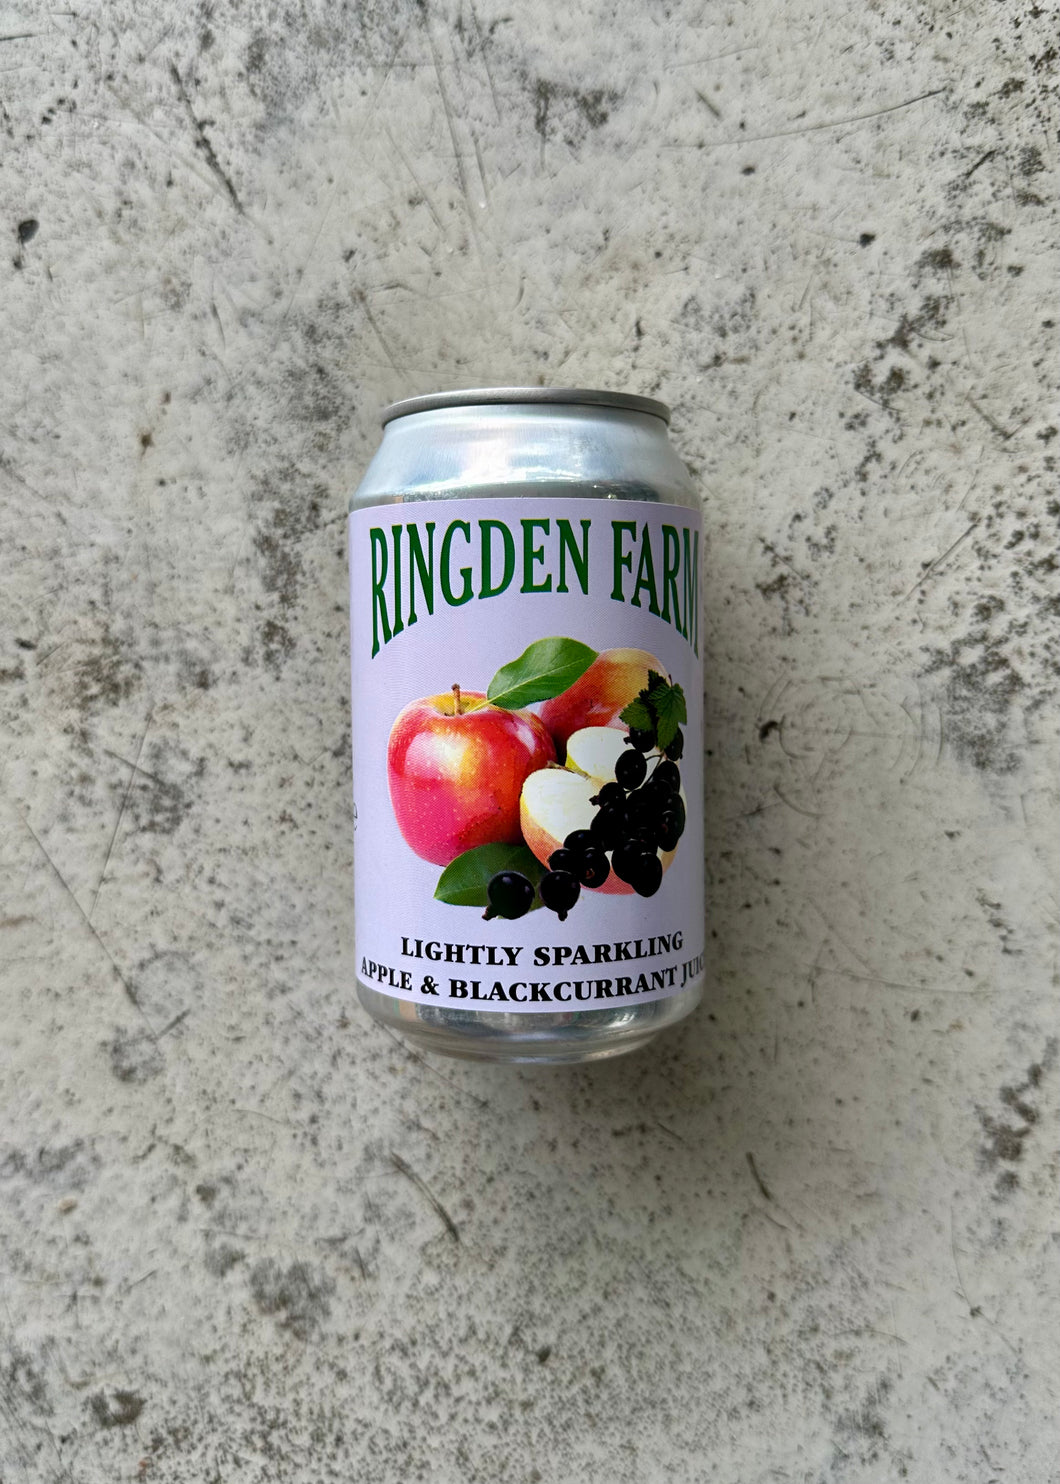 Ringden Farm Sparkling Blackcurrant & Apple (330ml)